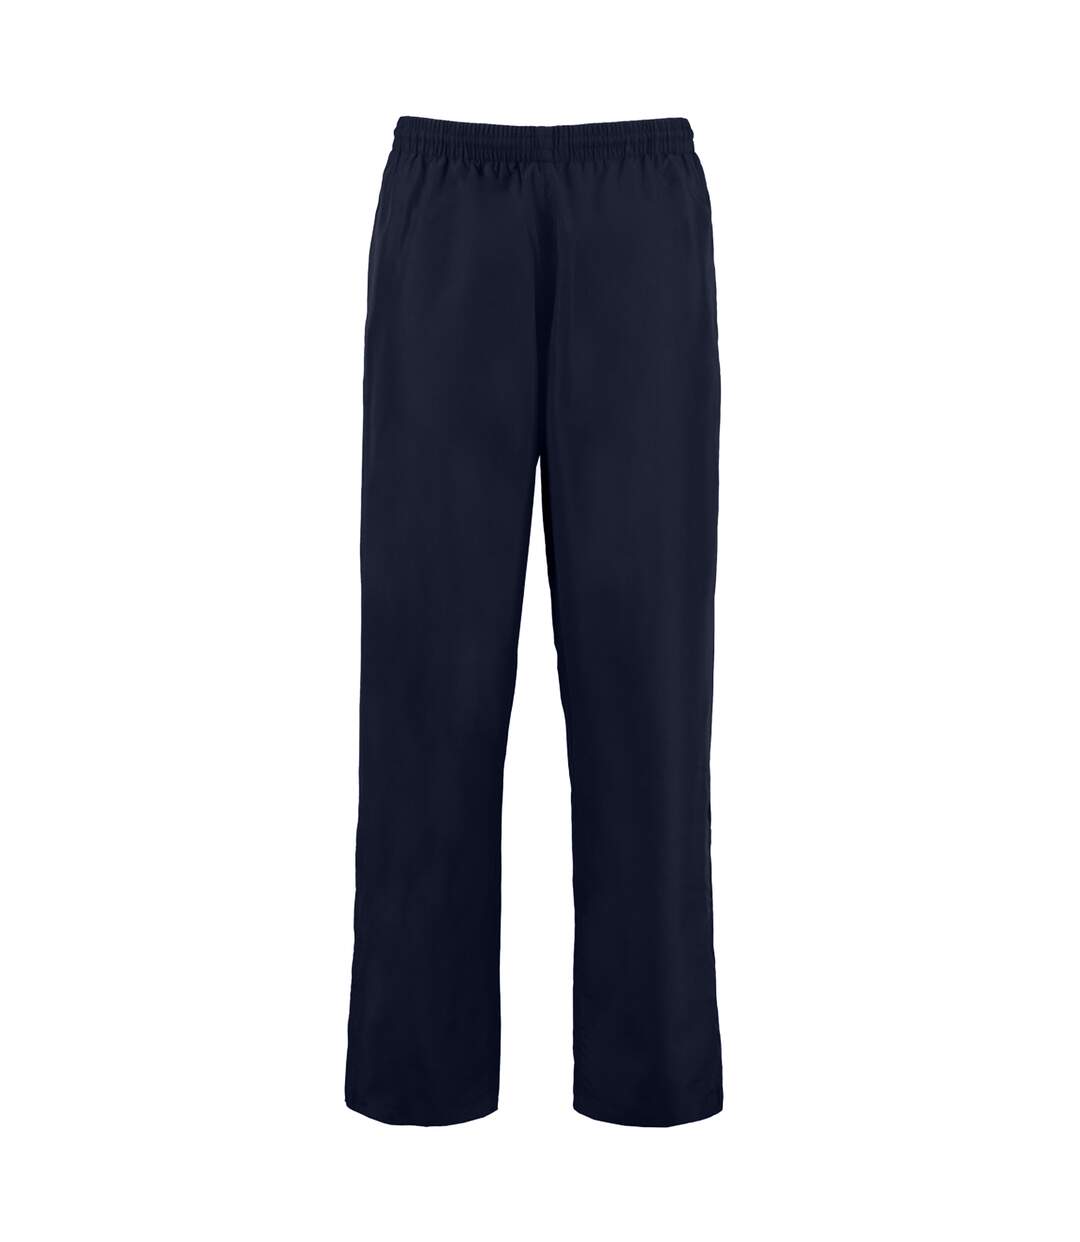 Gamegear® Cooltex® - Pantalon de jogging - Homme (Bleu marine) - UTBC448